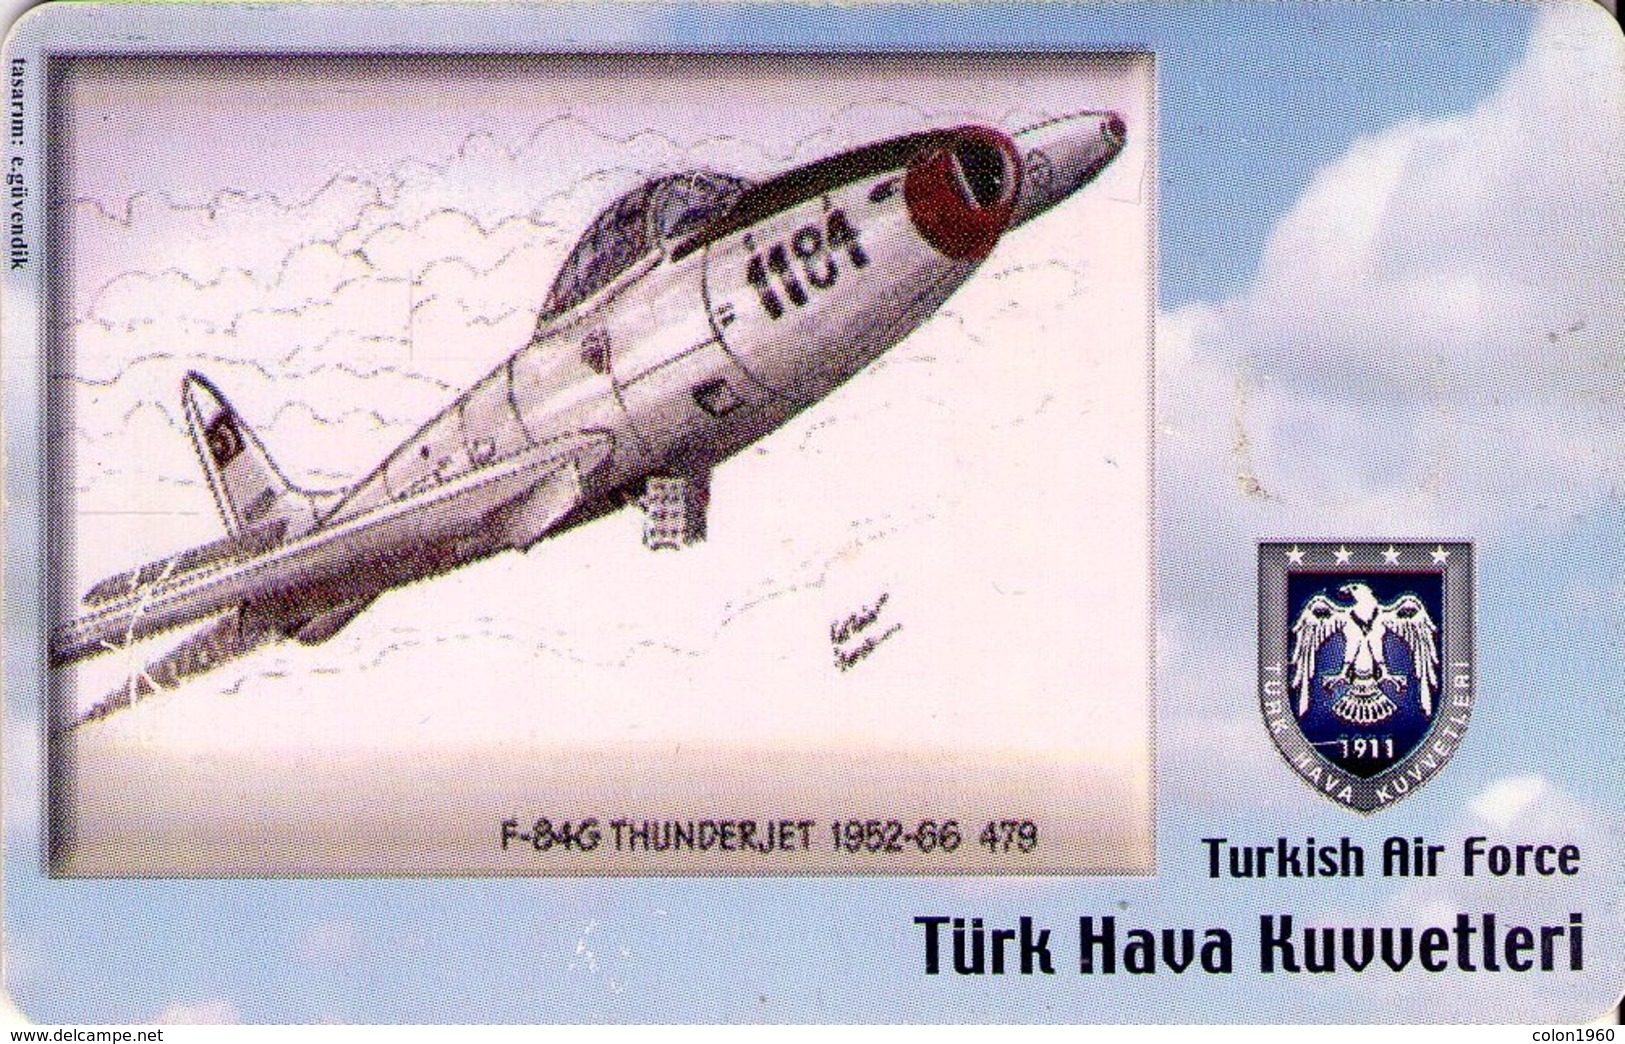 TURQUIA, AVION. (CHIP) TURKISH AIR FORCE, F-84G THUNDERJET 1952-66, TR-TT-C-0161. (127) - Avions